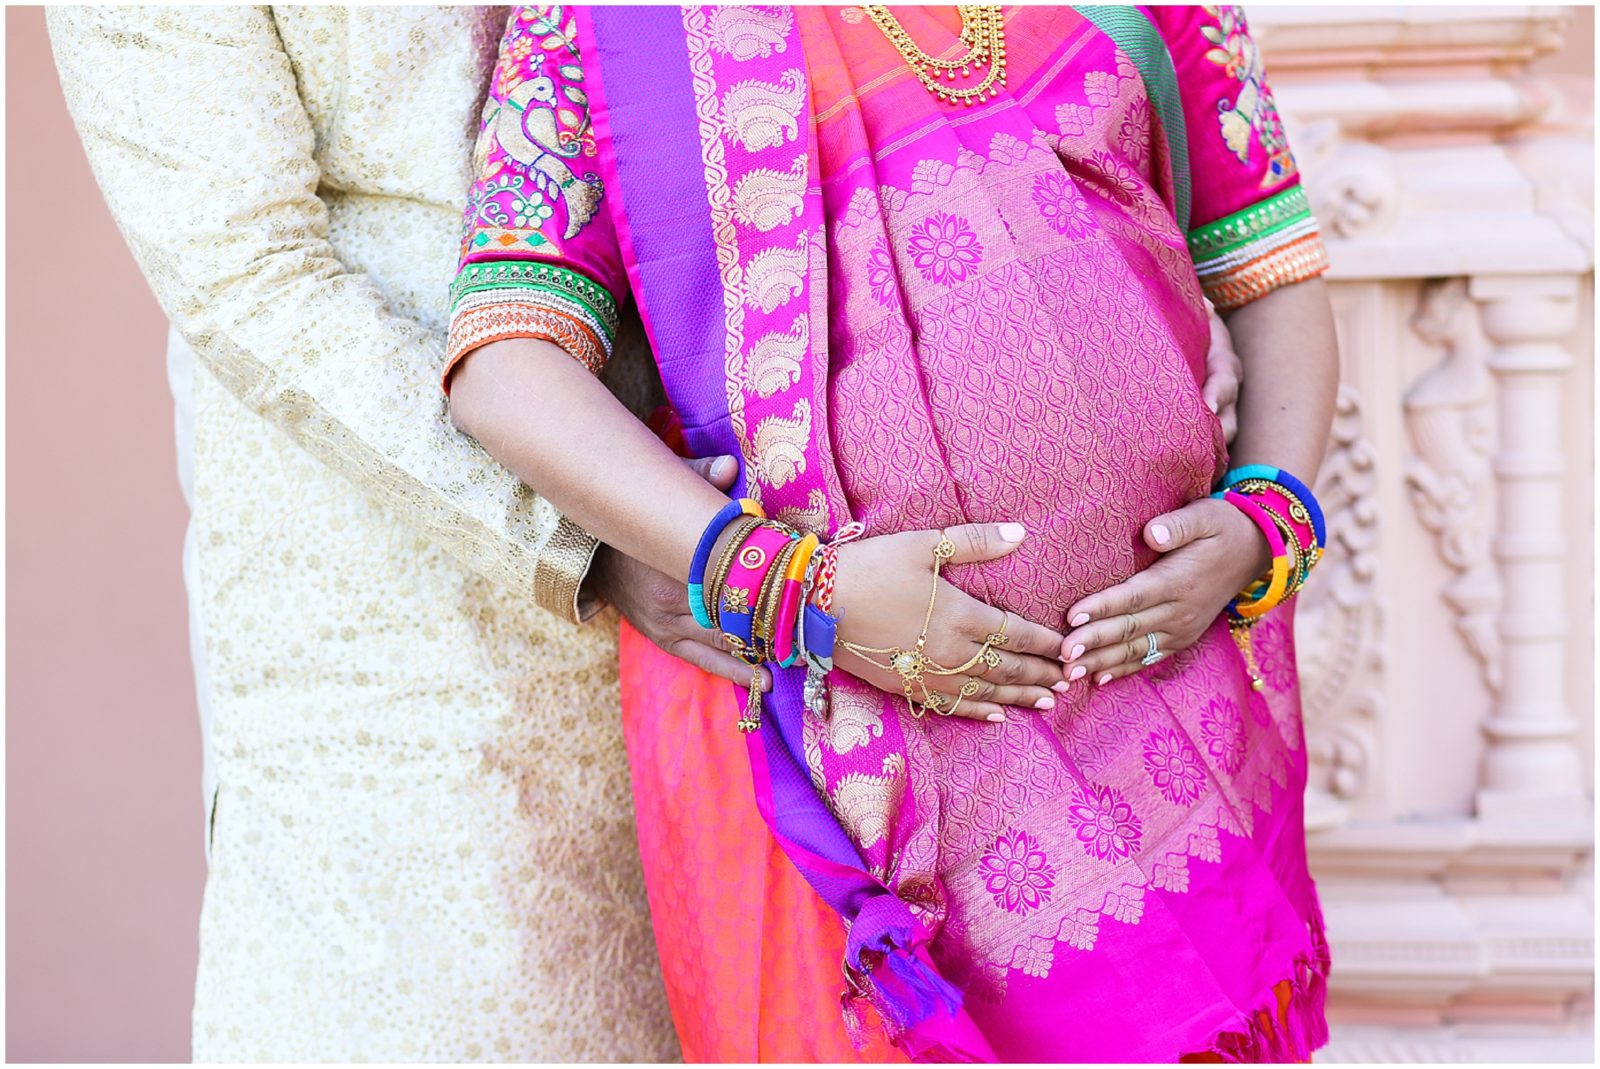 Hindu Baby Shower Portrait Photography in Shawnee Mission Kansas - Hindu Indian Wedding Photographer - BAPS Hindu Temple - Baby Shower Maternity